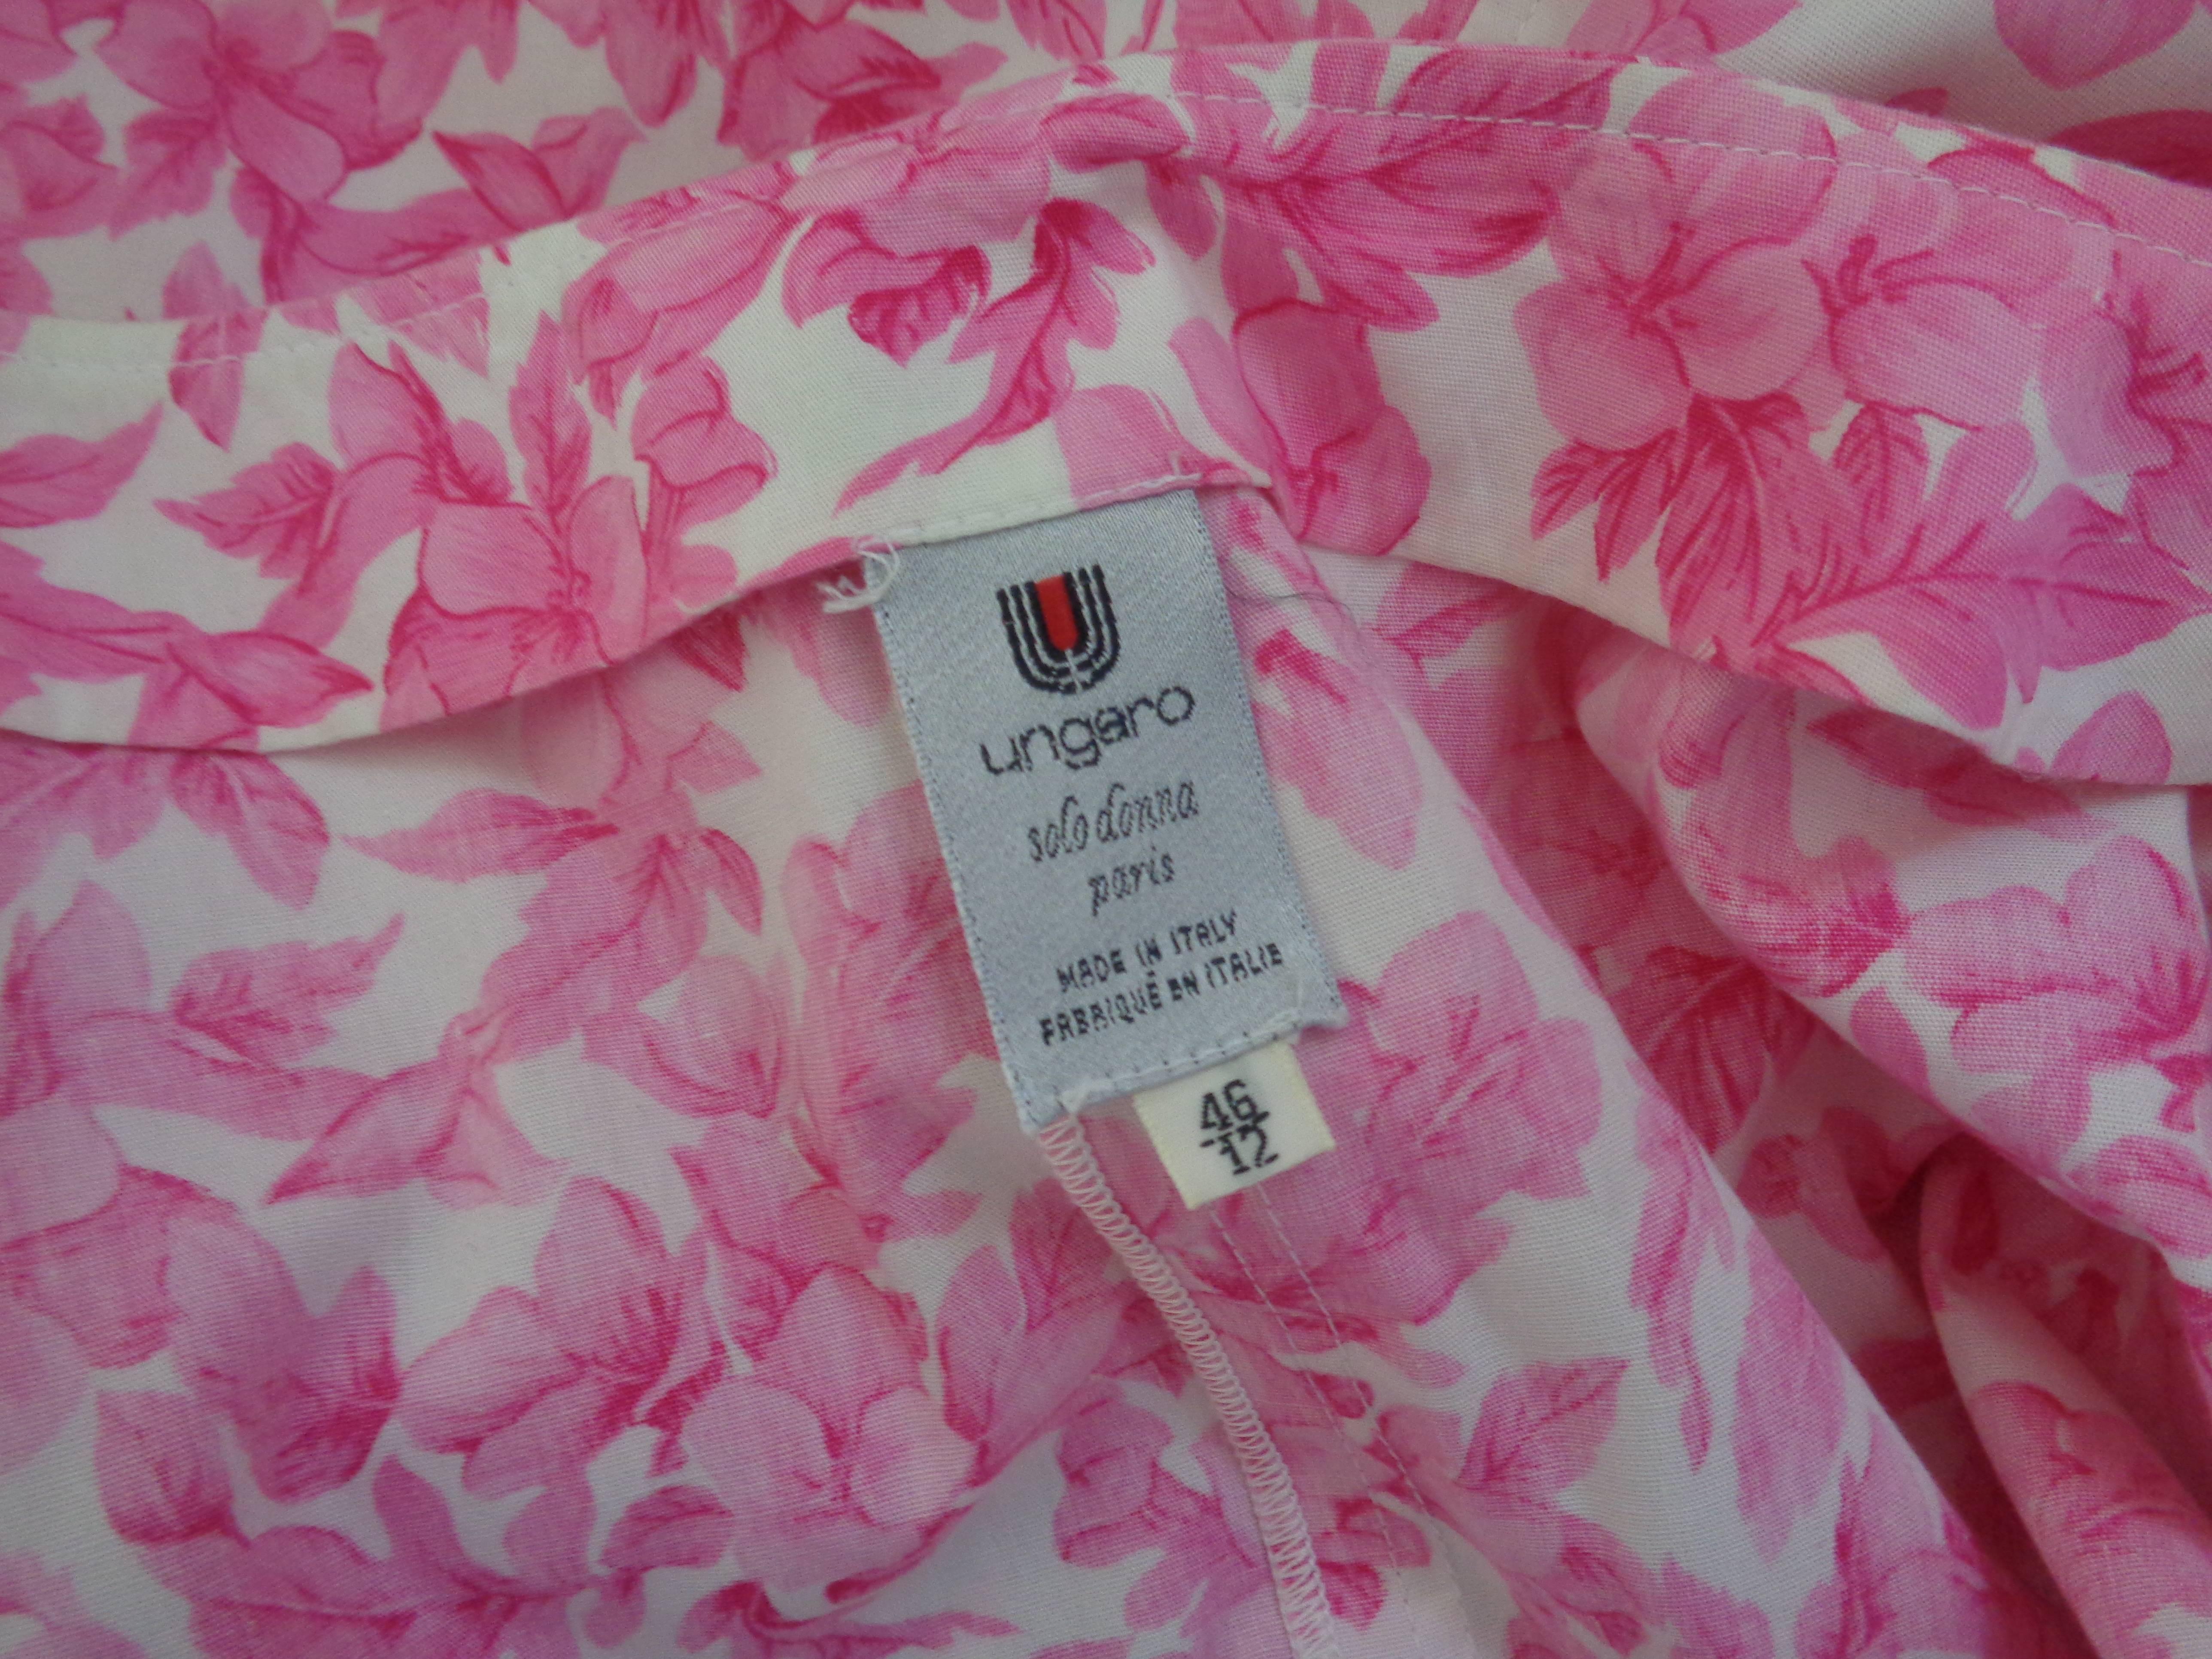 Women's Ungaro Solo Donna Paris White pink flower dress